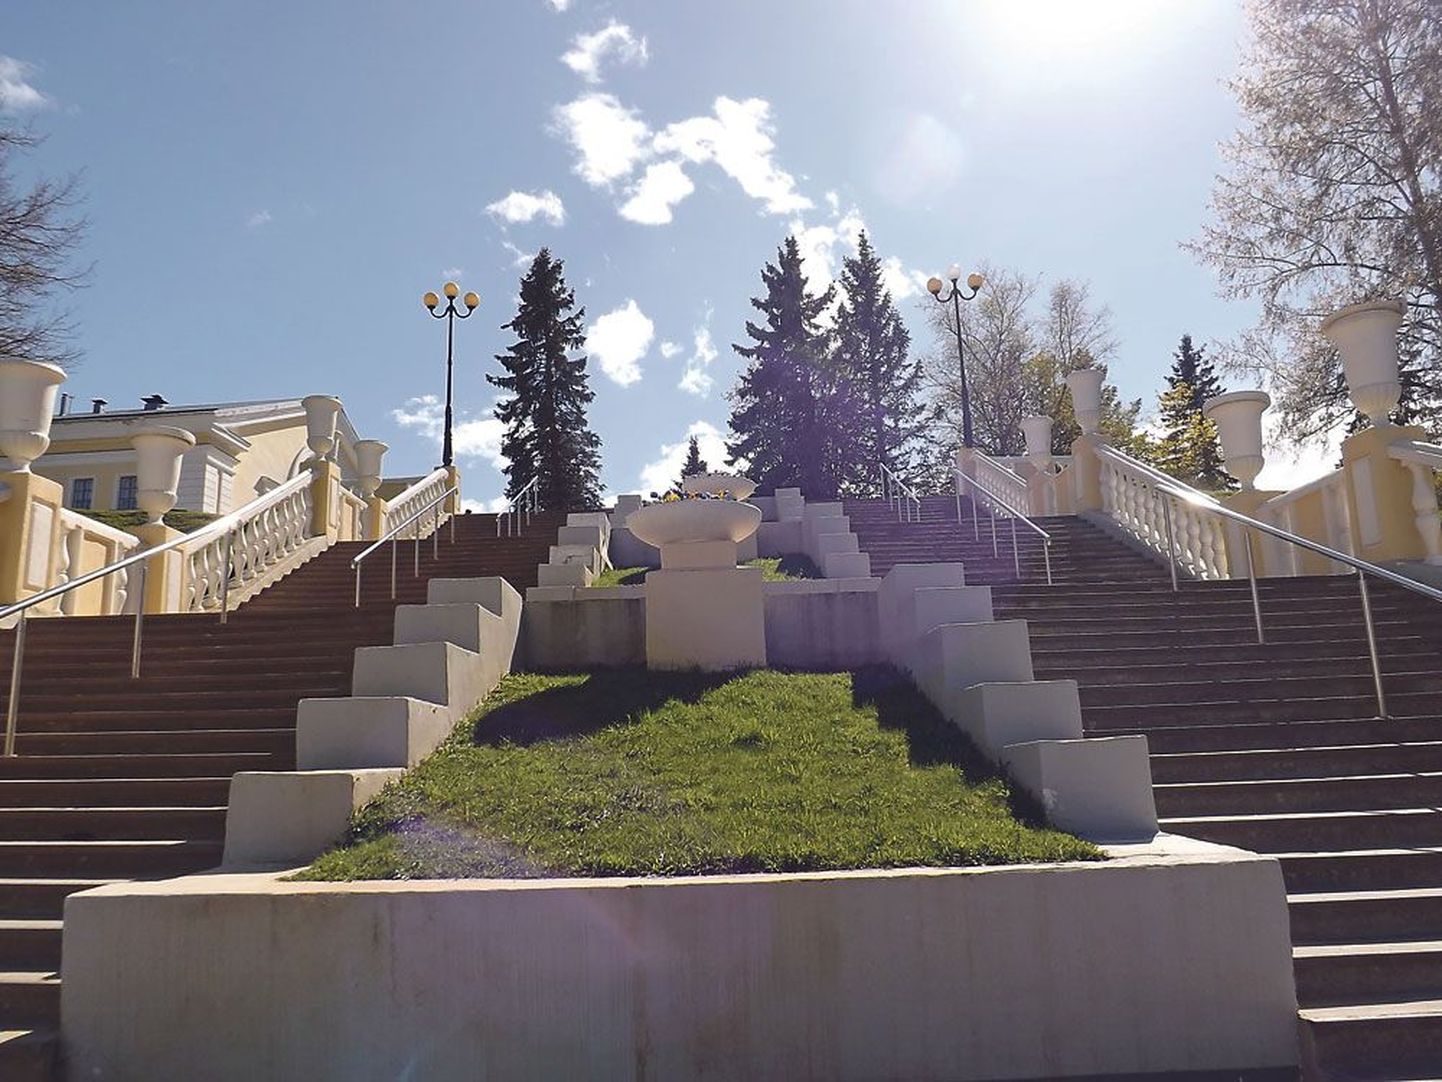 Лестница, ведущая от парка возле Центра культуры к Морскому бульвару, –  визитная карточка Силламяэ.